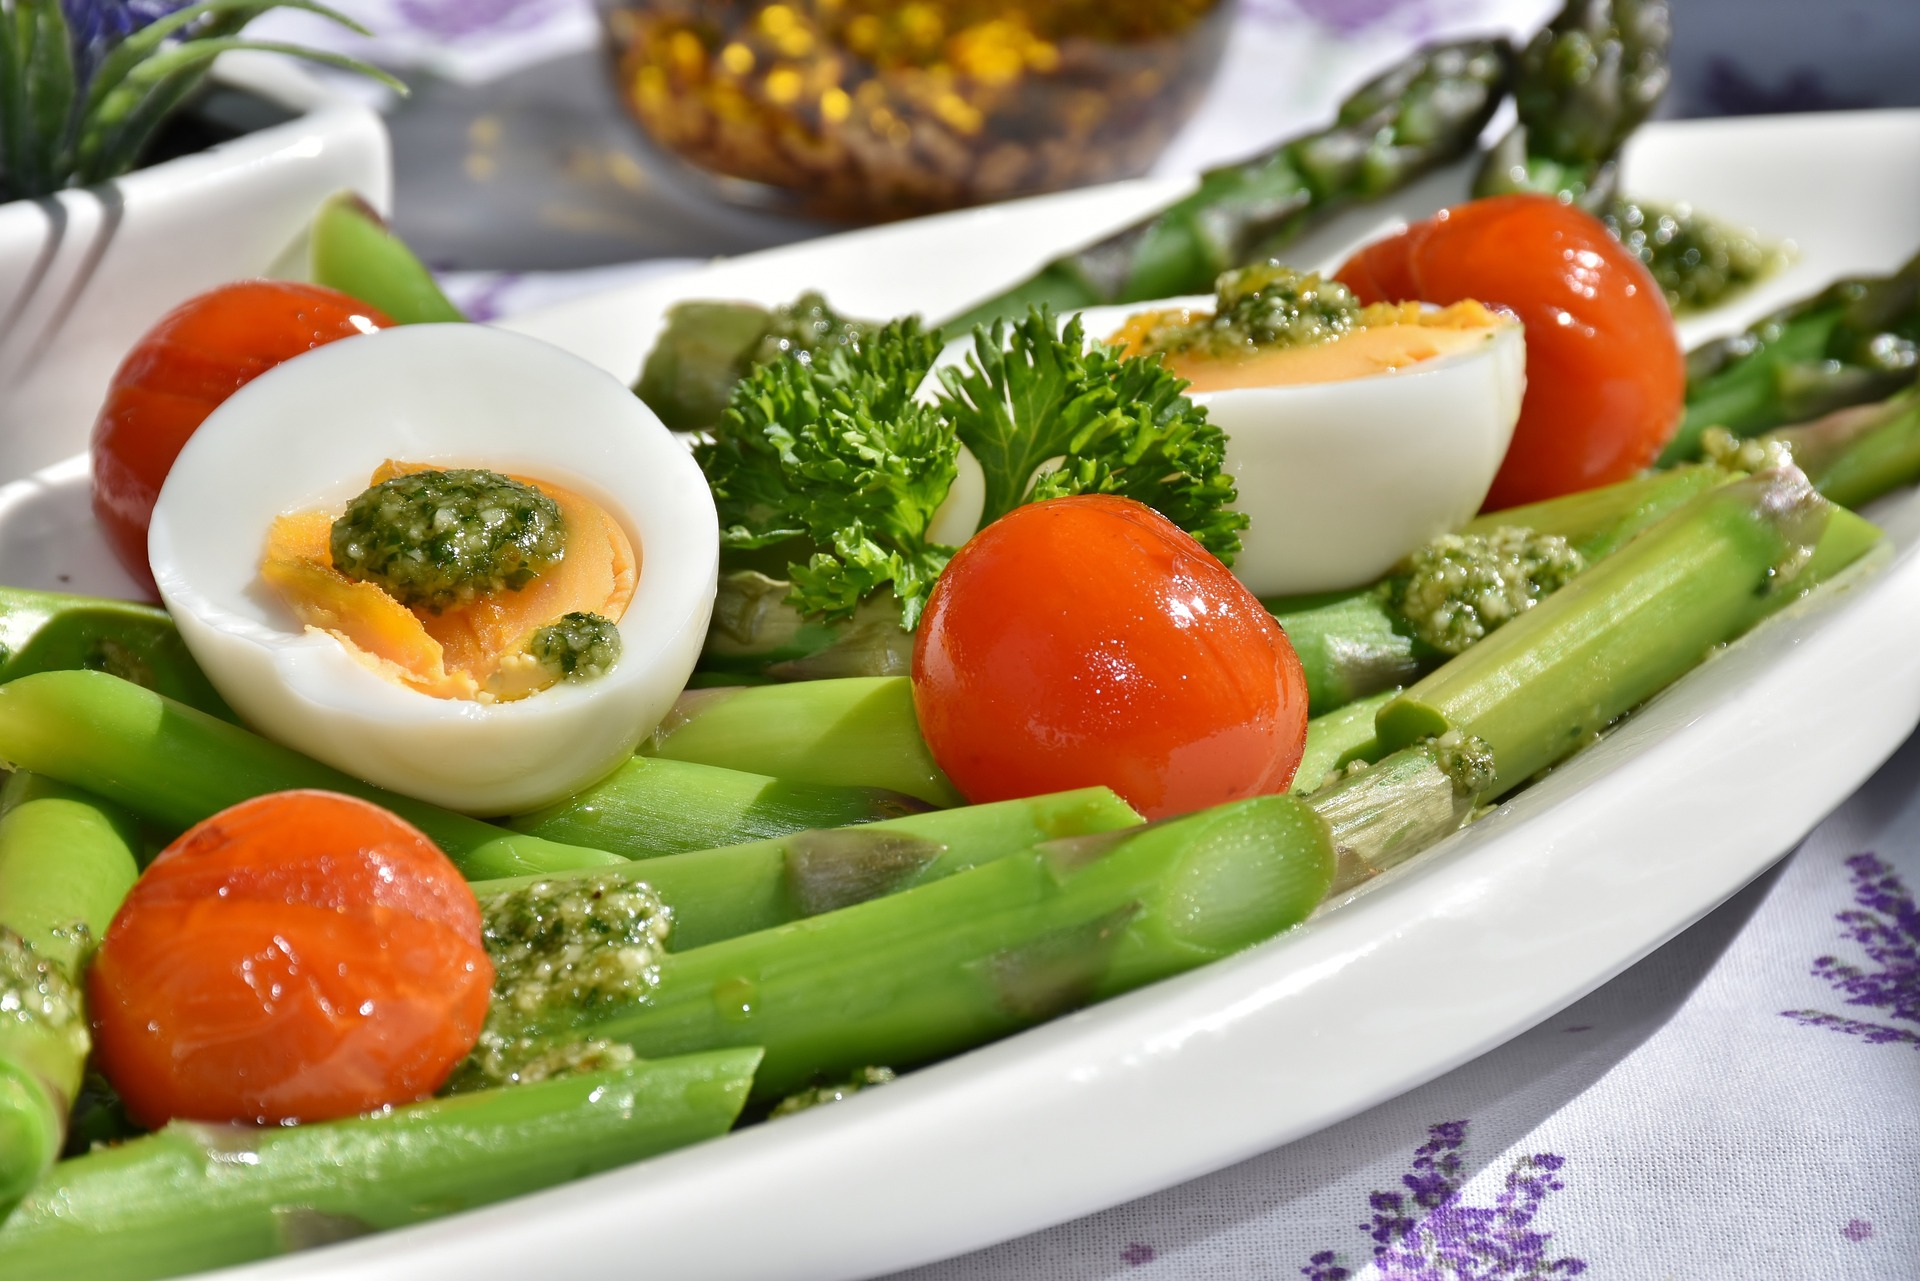 Veggie Delights: 10 Creative Meal Planning Ideas